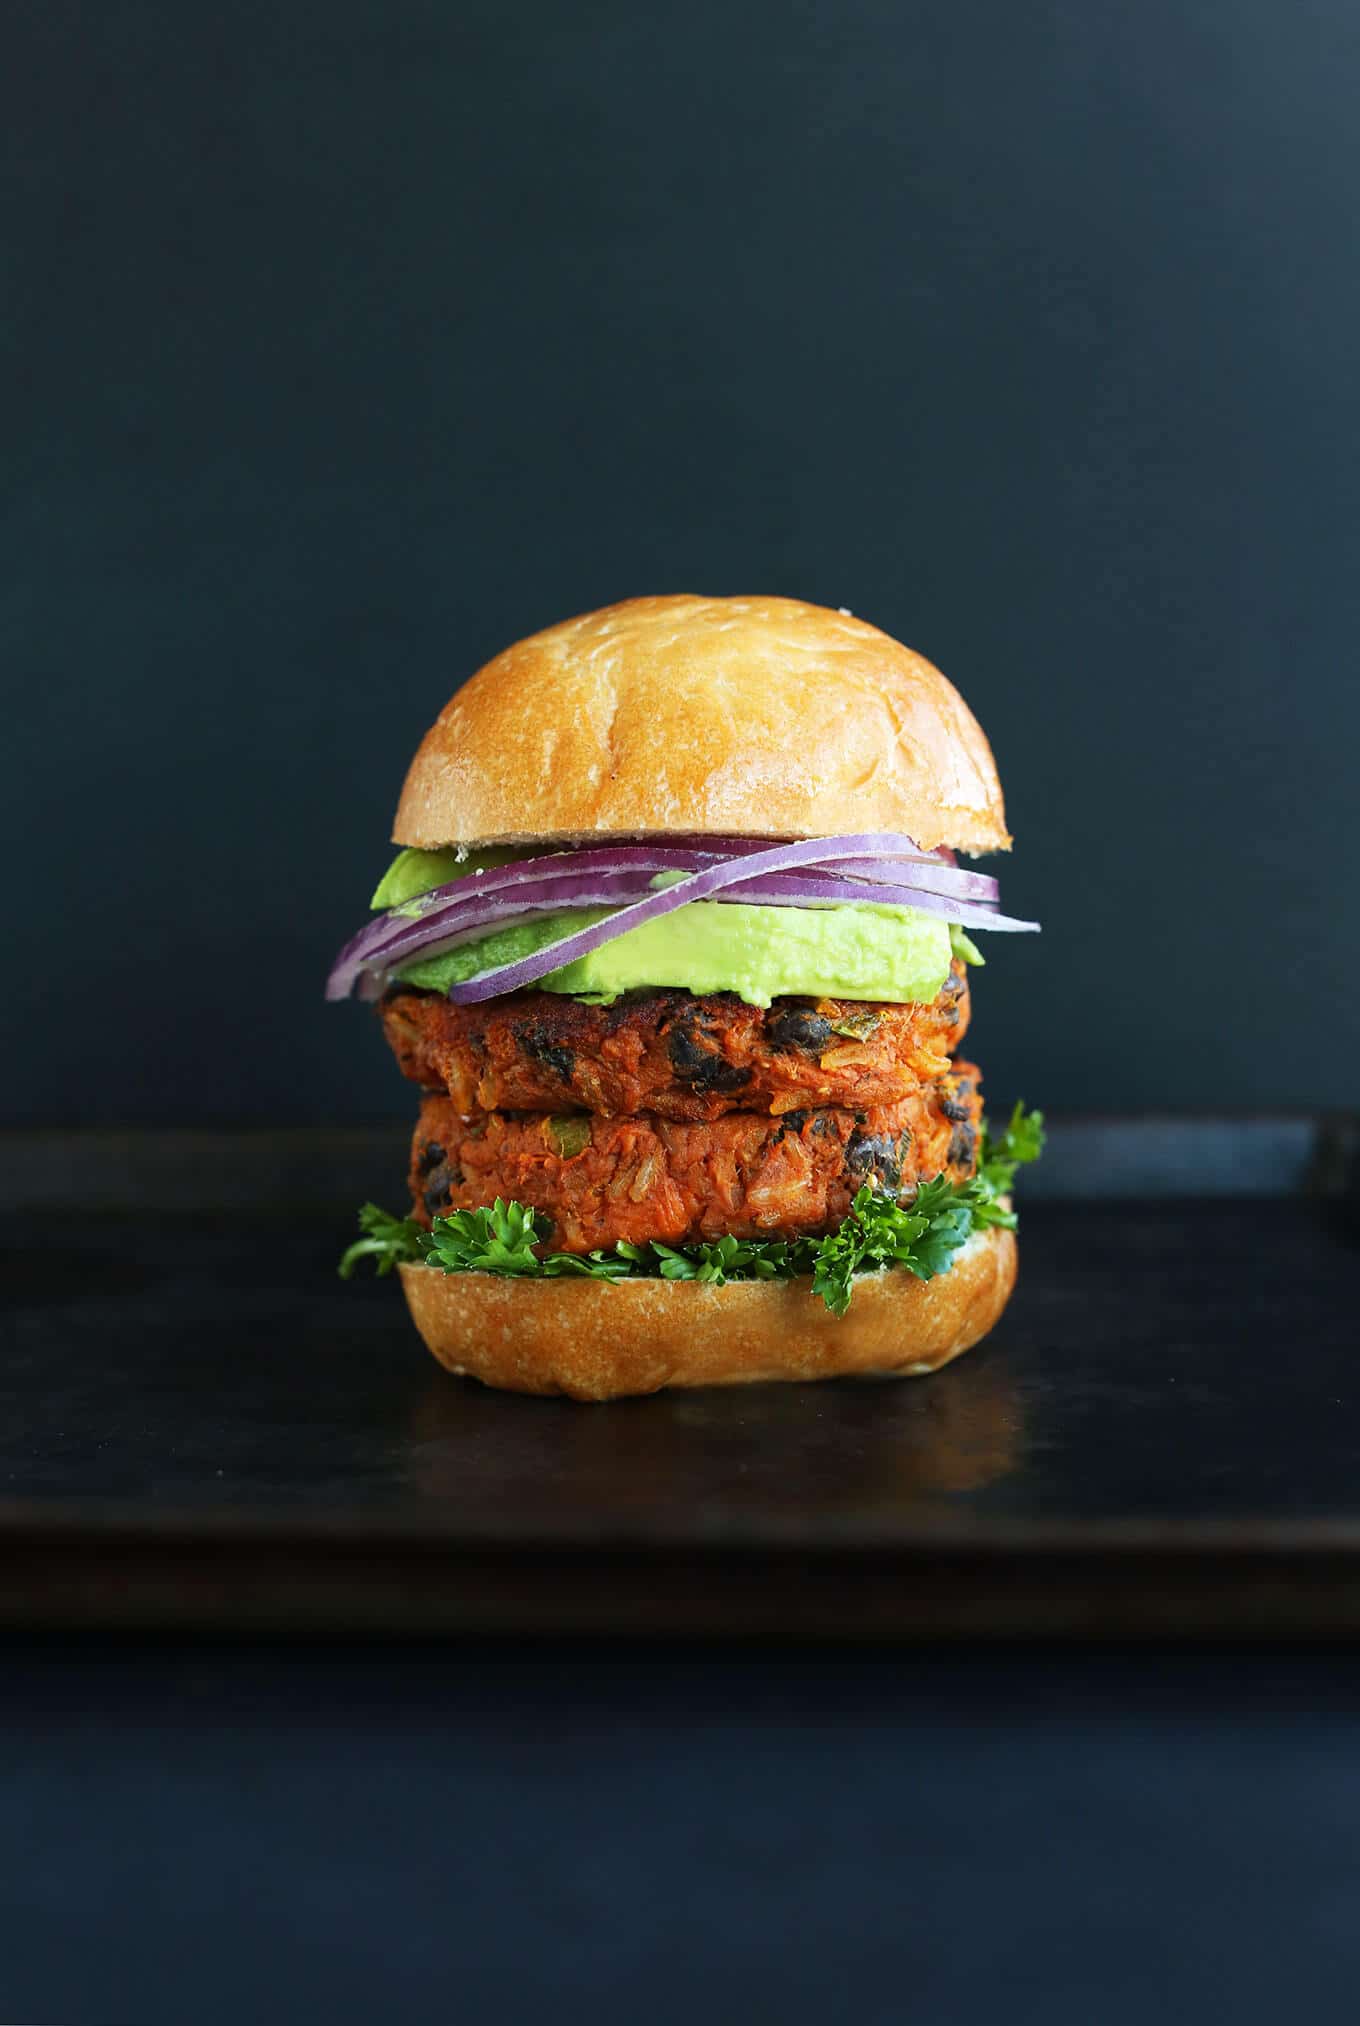 Best Healthy Burger Recipes for Summer |Gluten Free,Vegan,Paleo